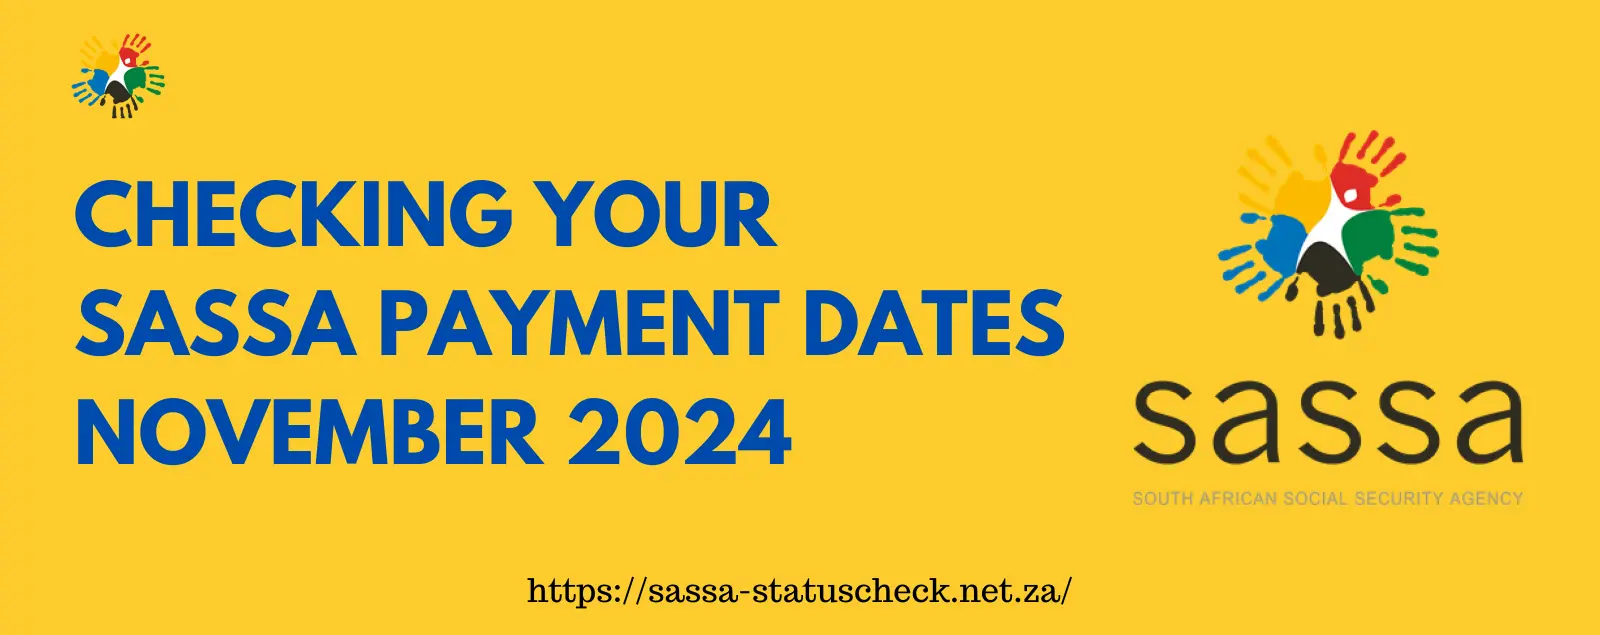 SASSA Payment Dates November 2024